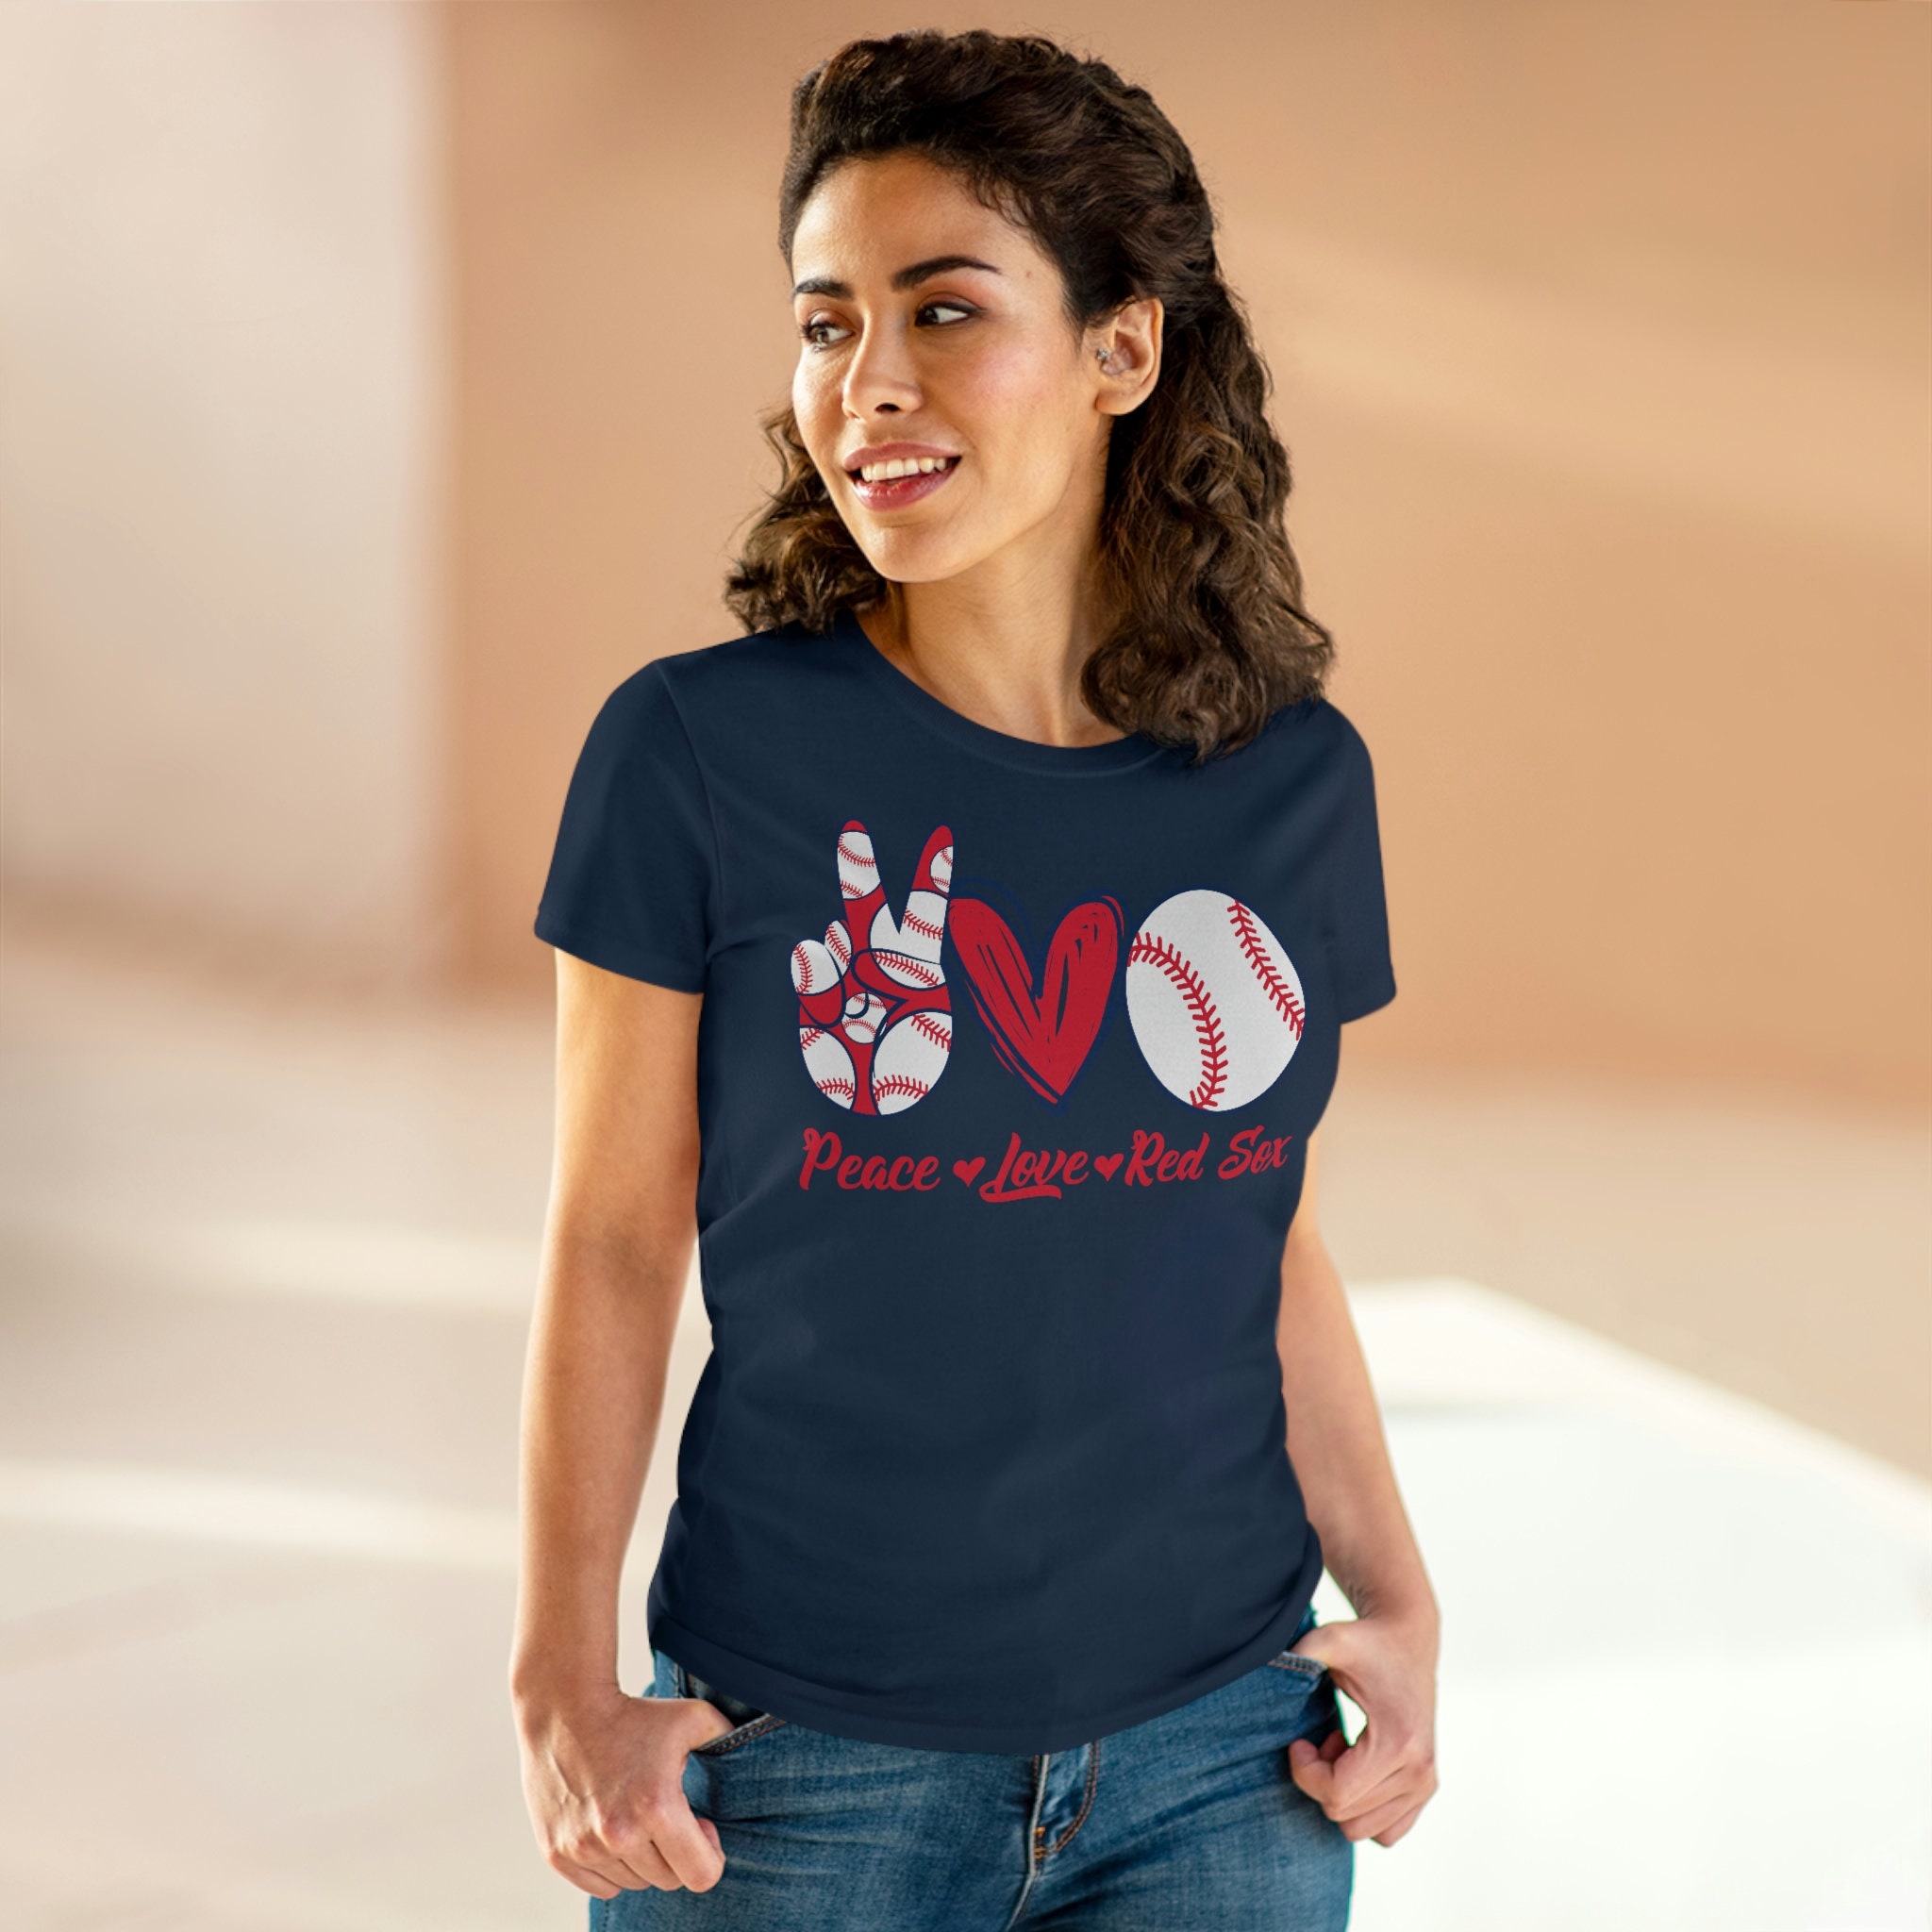 Red Sox Womens Shirt 